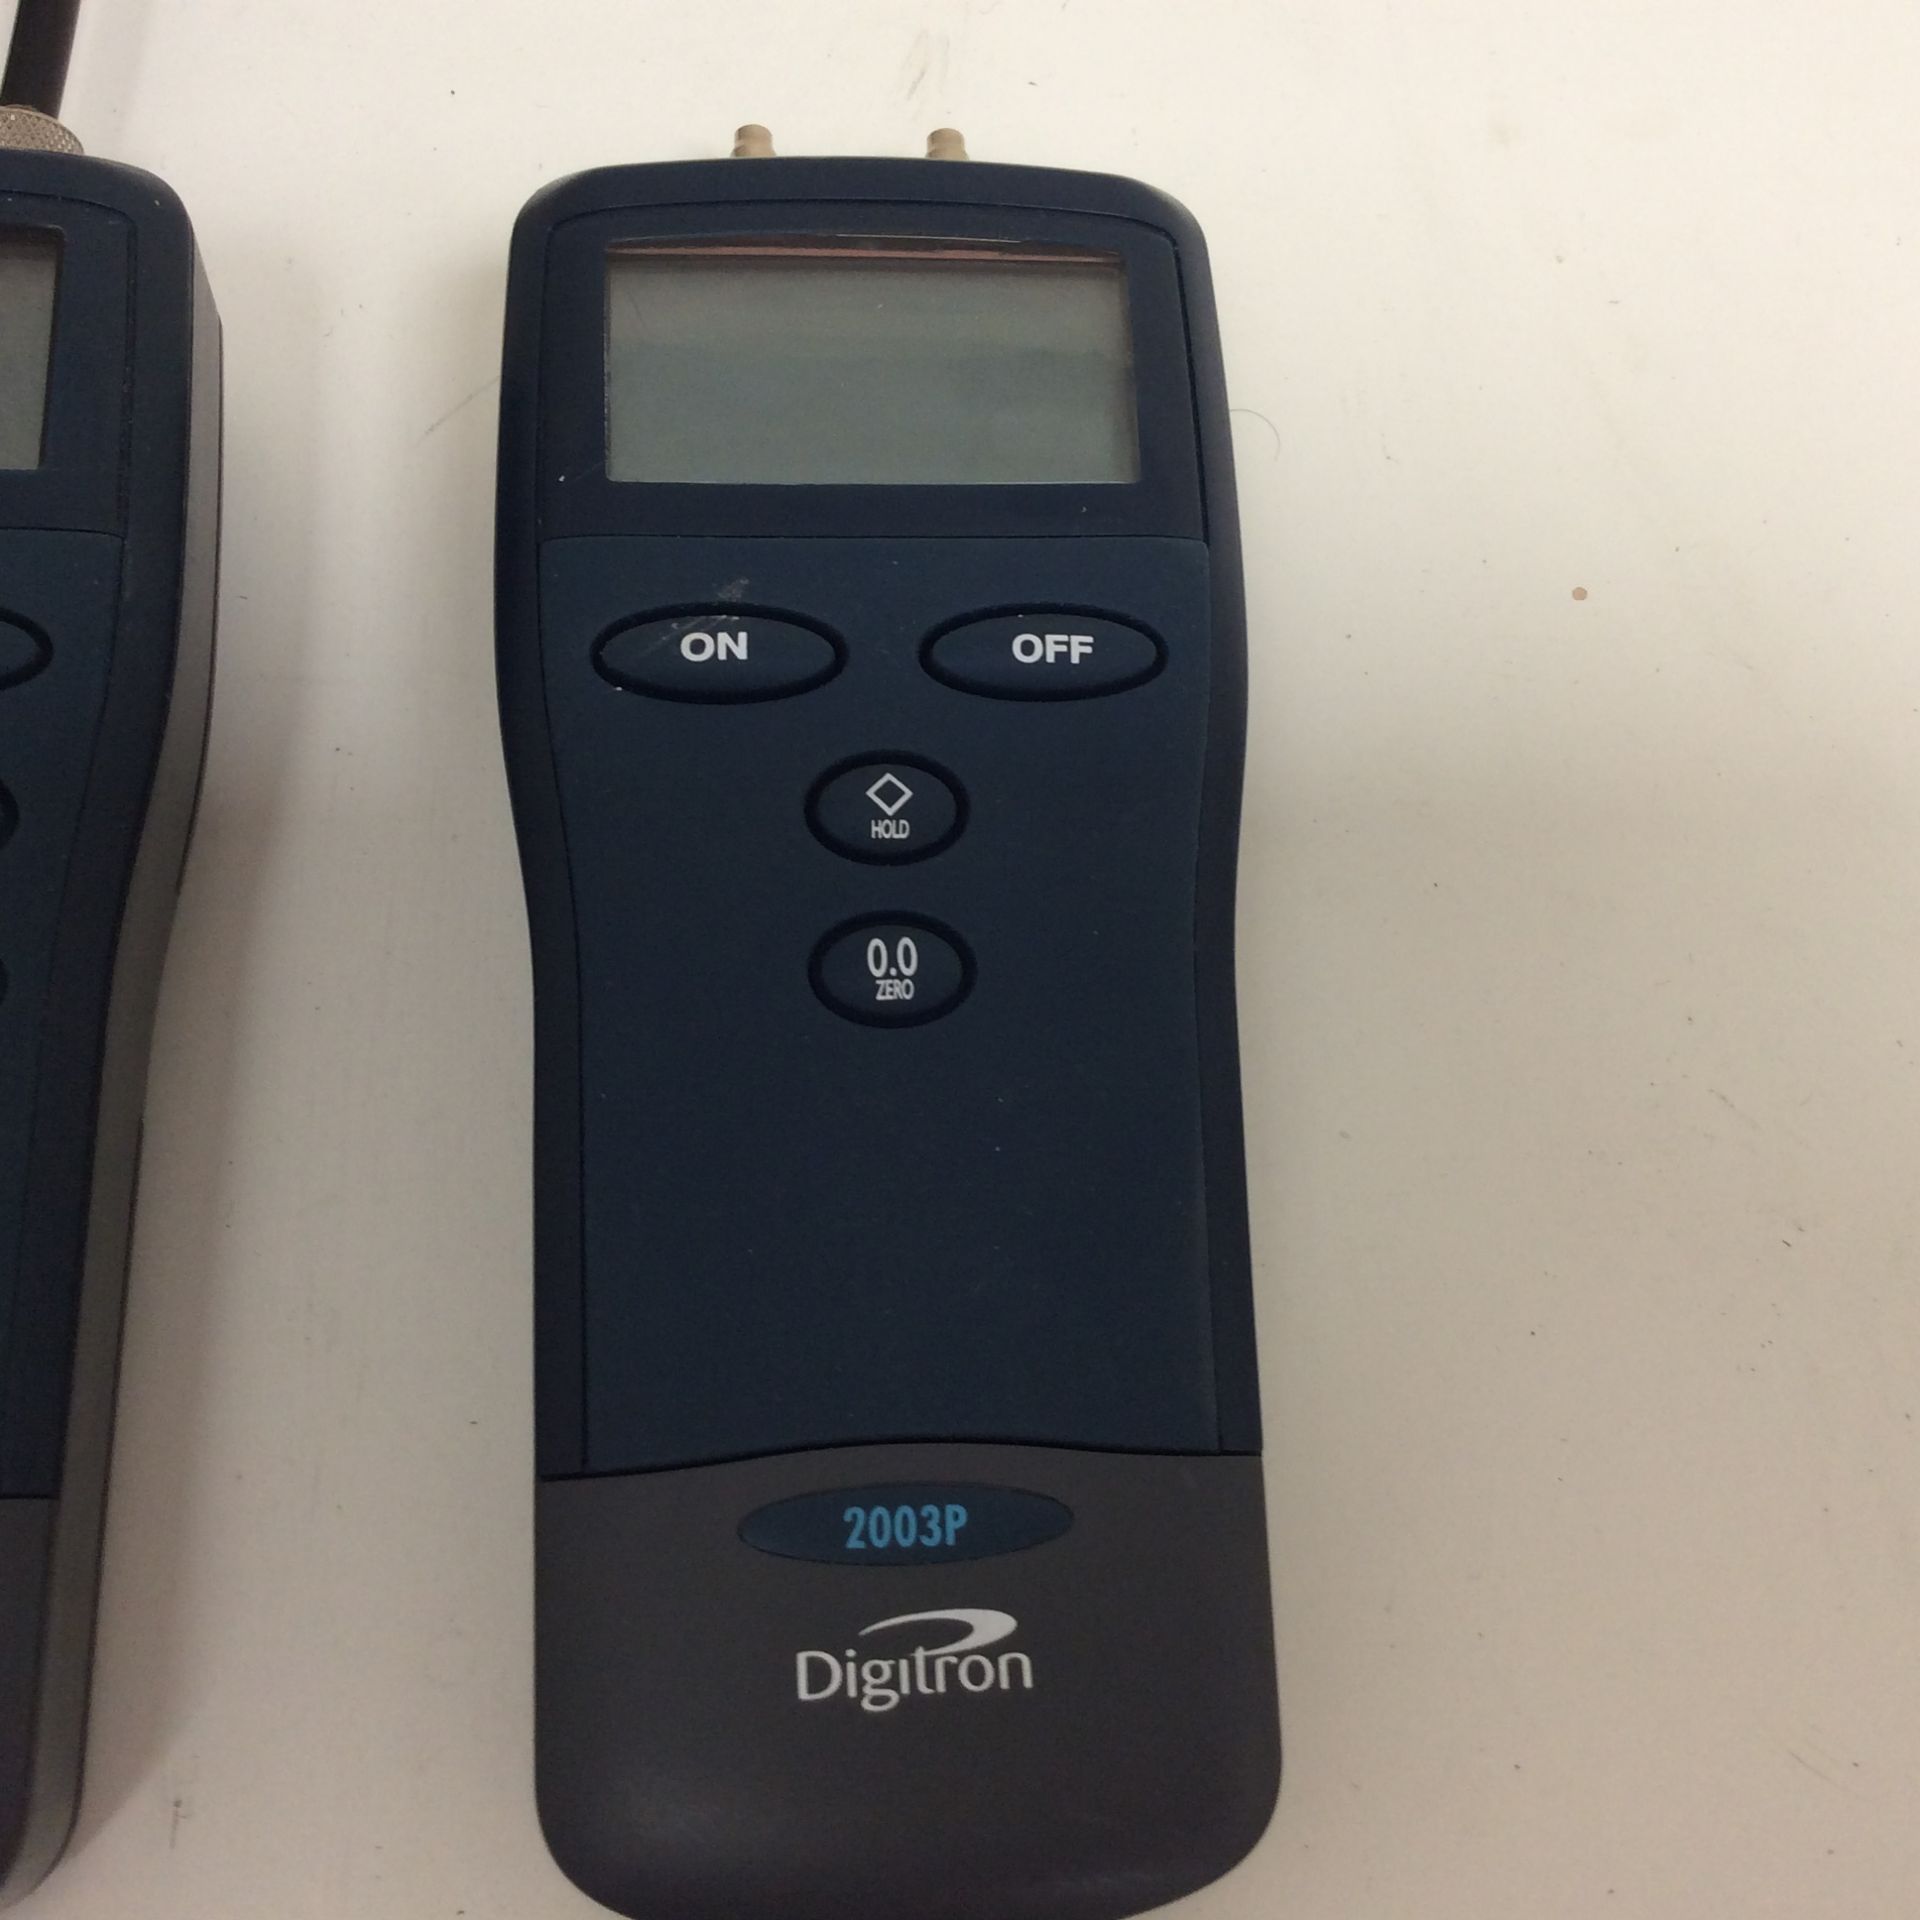 2x digitron pressure meters models 2086p and 2003p - Image 3 of 4